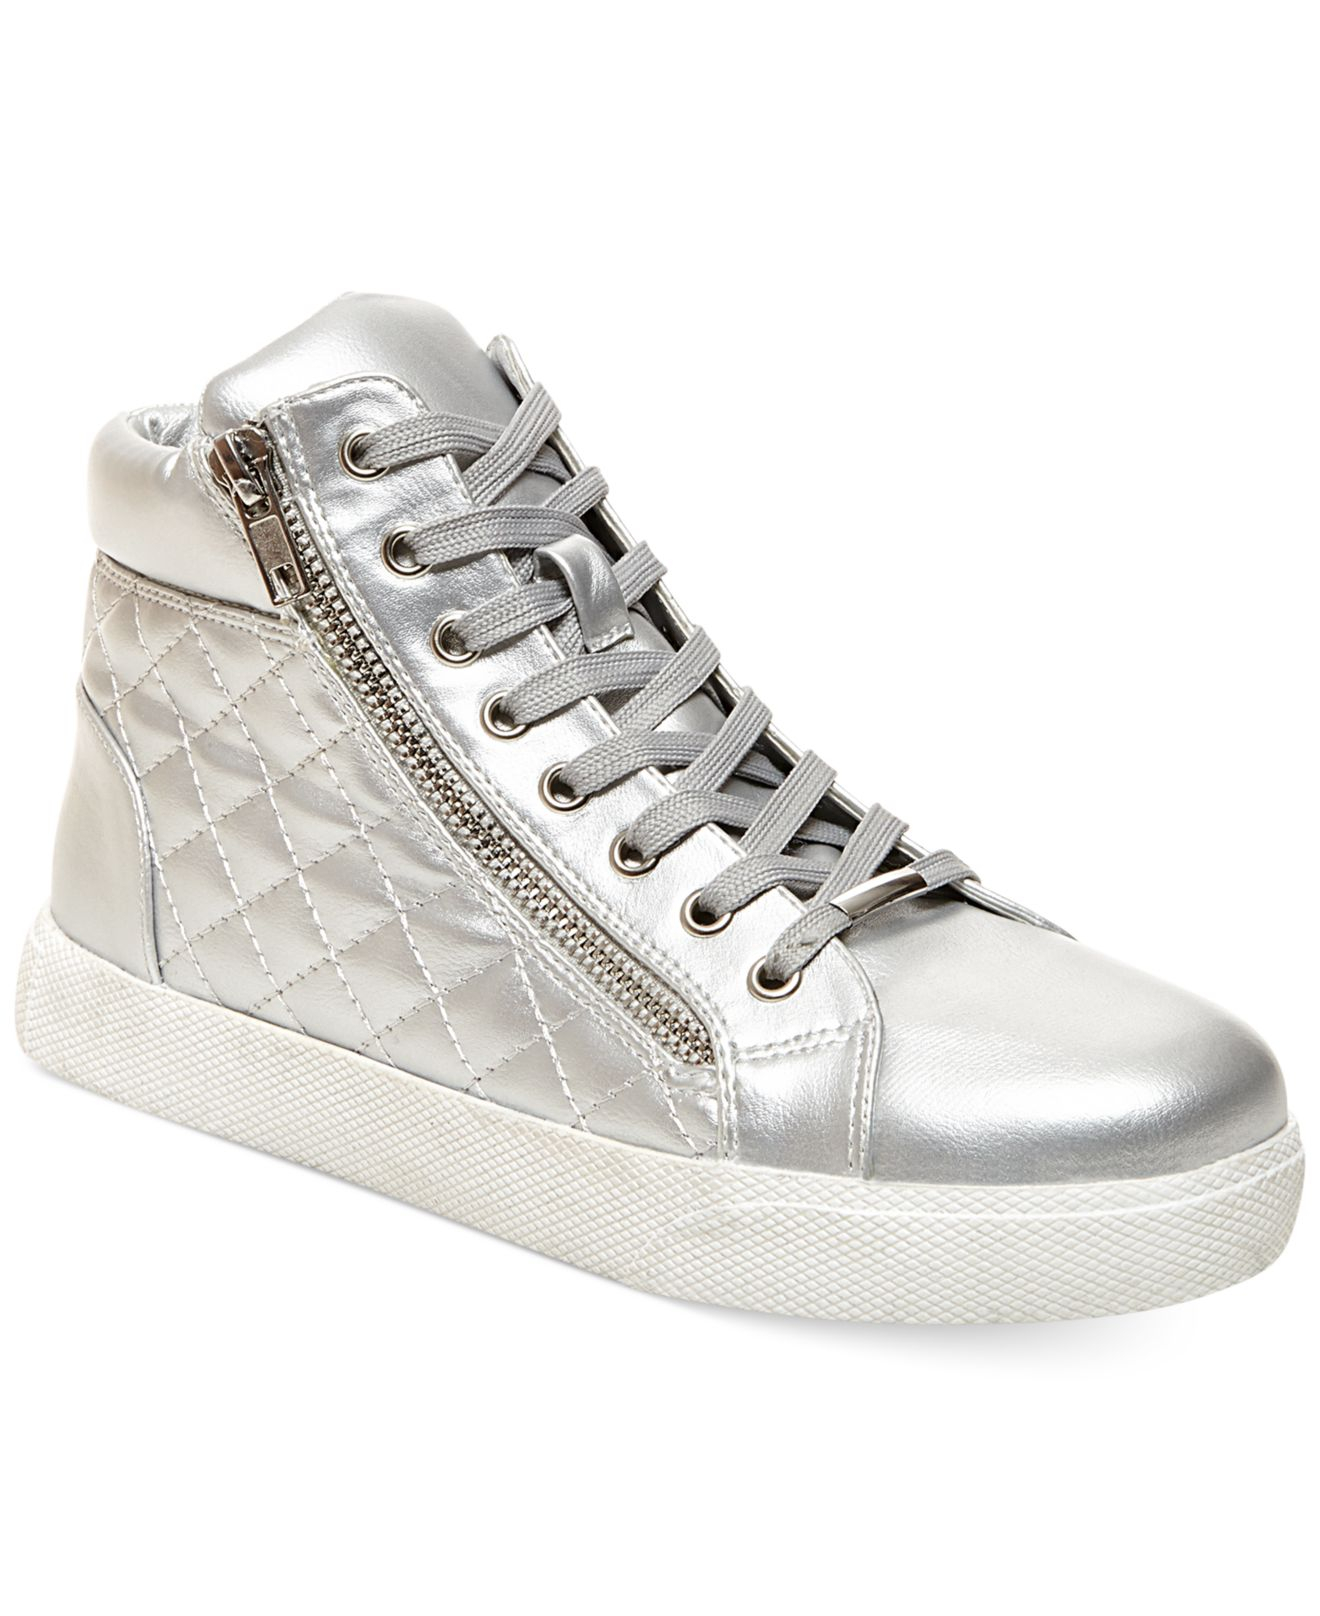 Steve Madden Decaf Hightop Quilted Platform Sneakers in Silver